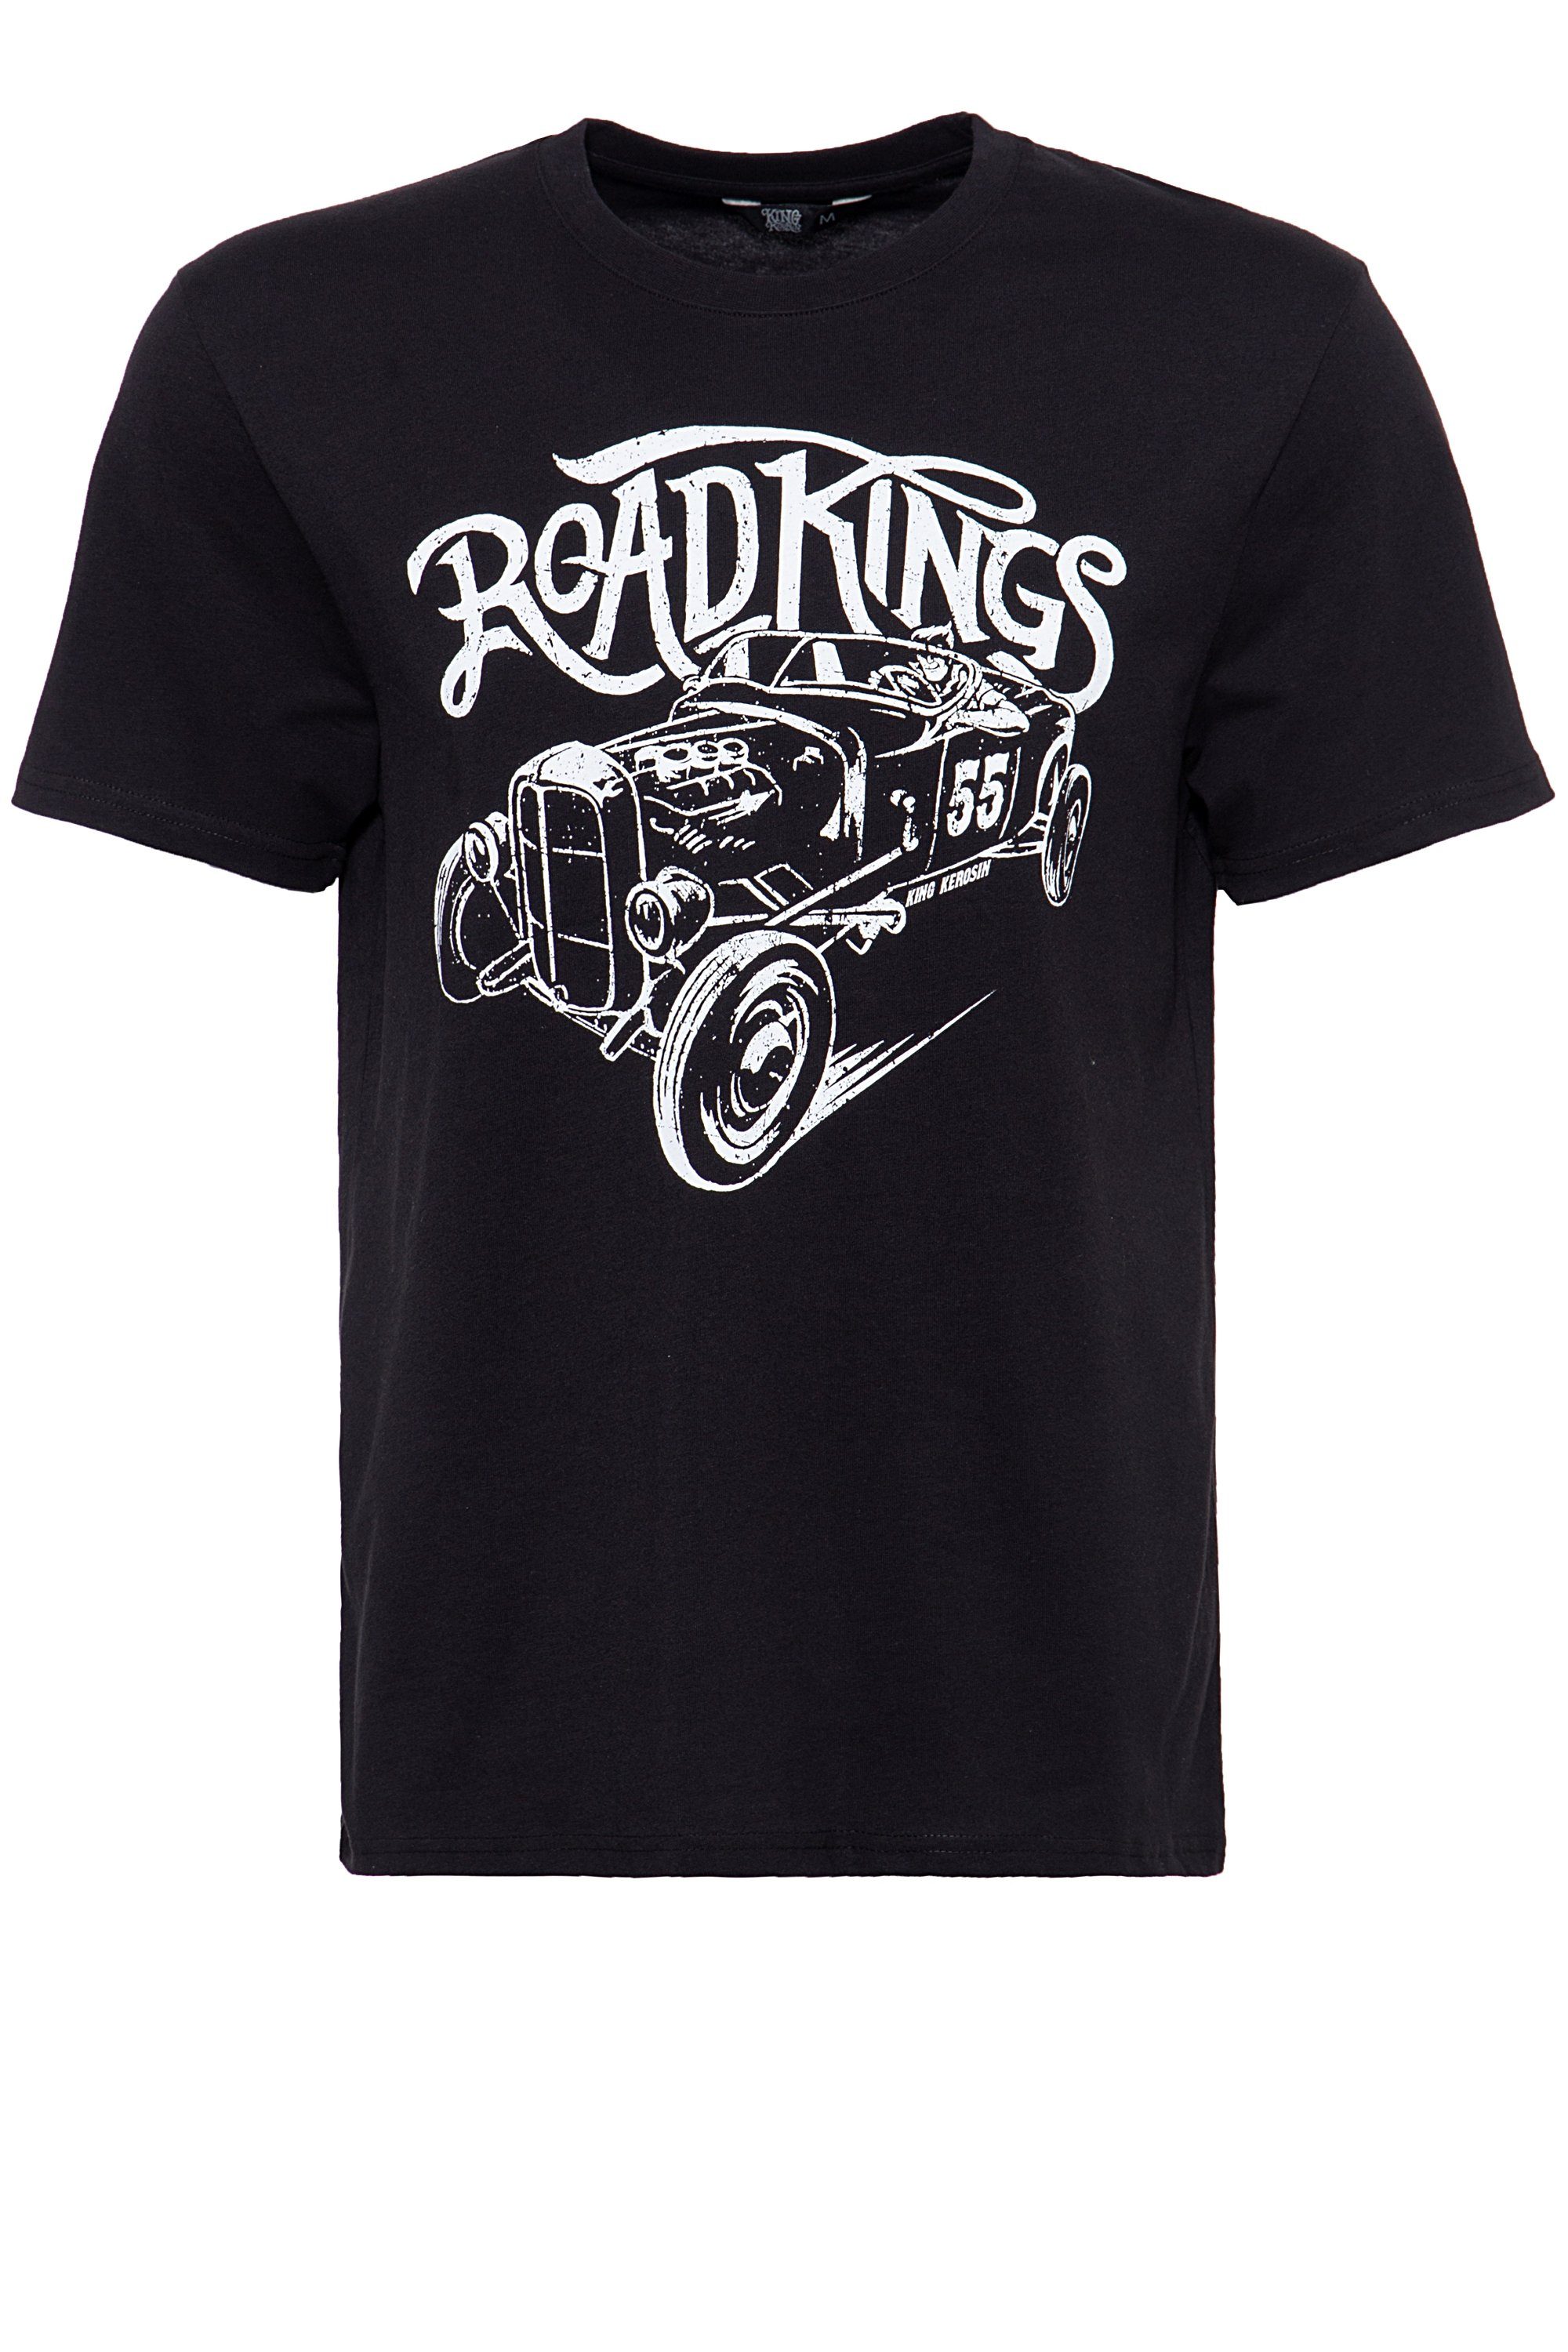 KingKerosin T-Shirt Road Kings mit Retro-Druck black